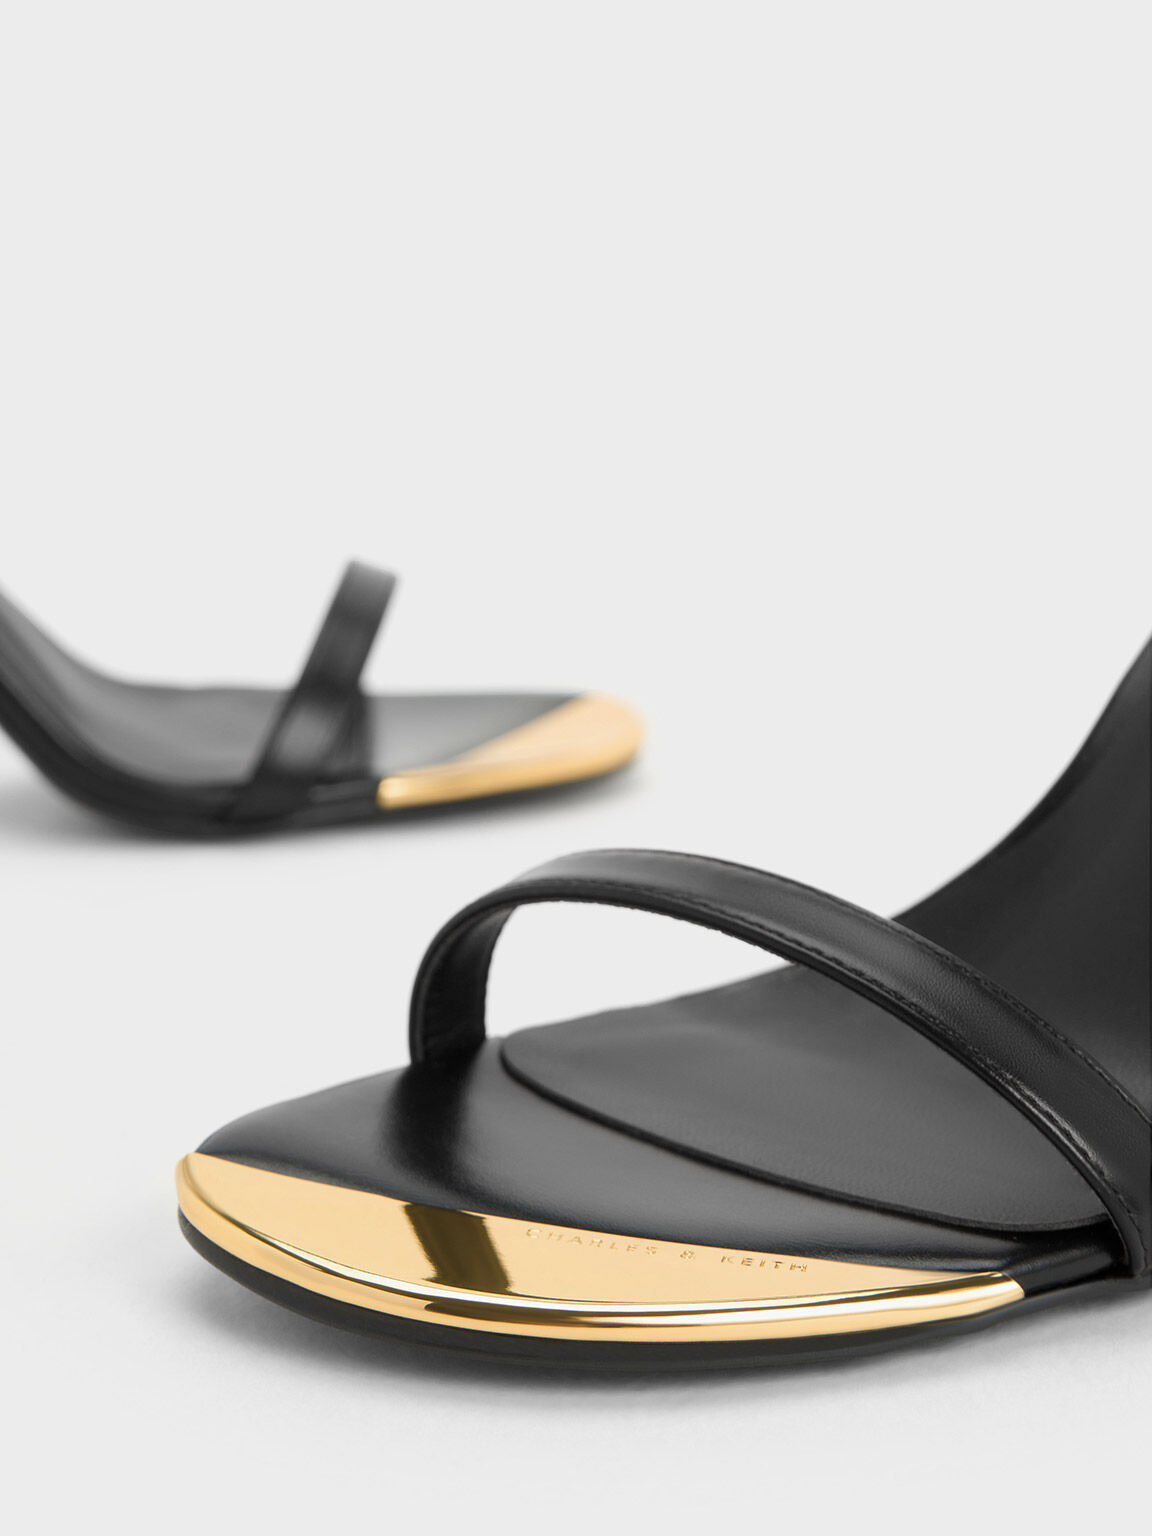 Selah Gold Ankle Strap Heels | Ankle strap heels, Gold ankle strap heels, Strap  heels